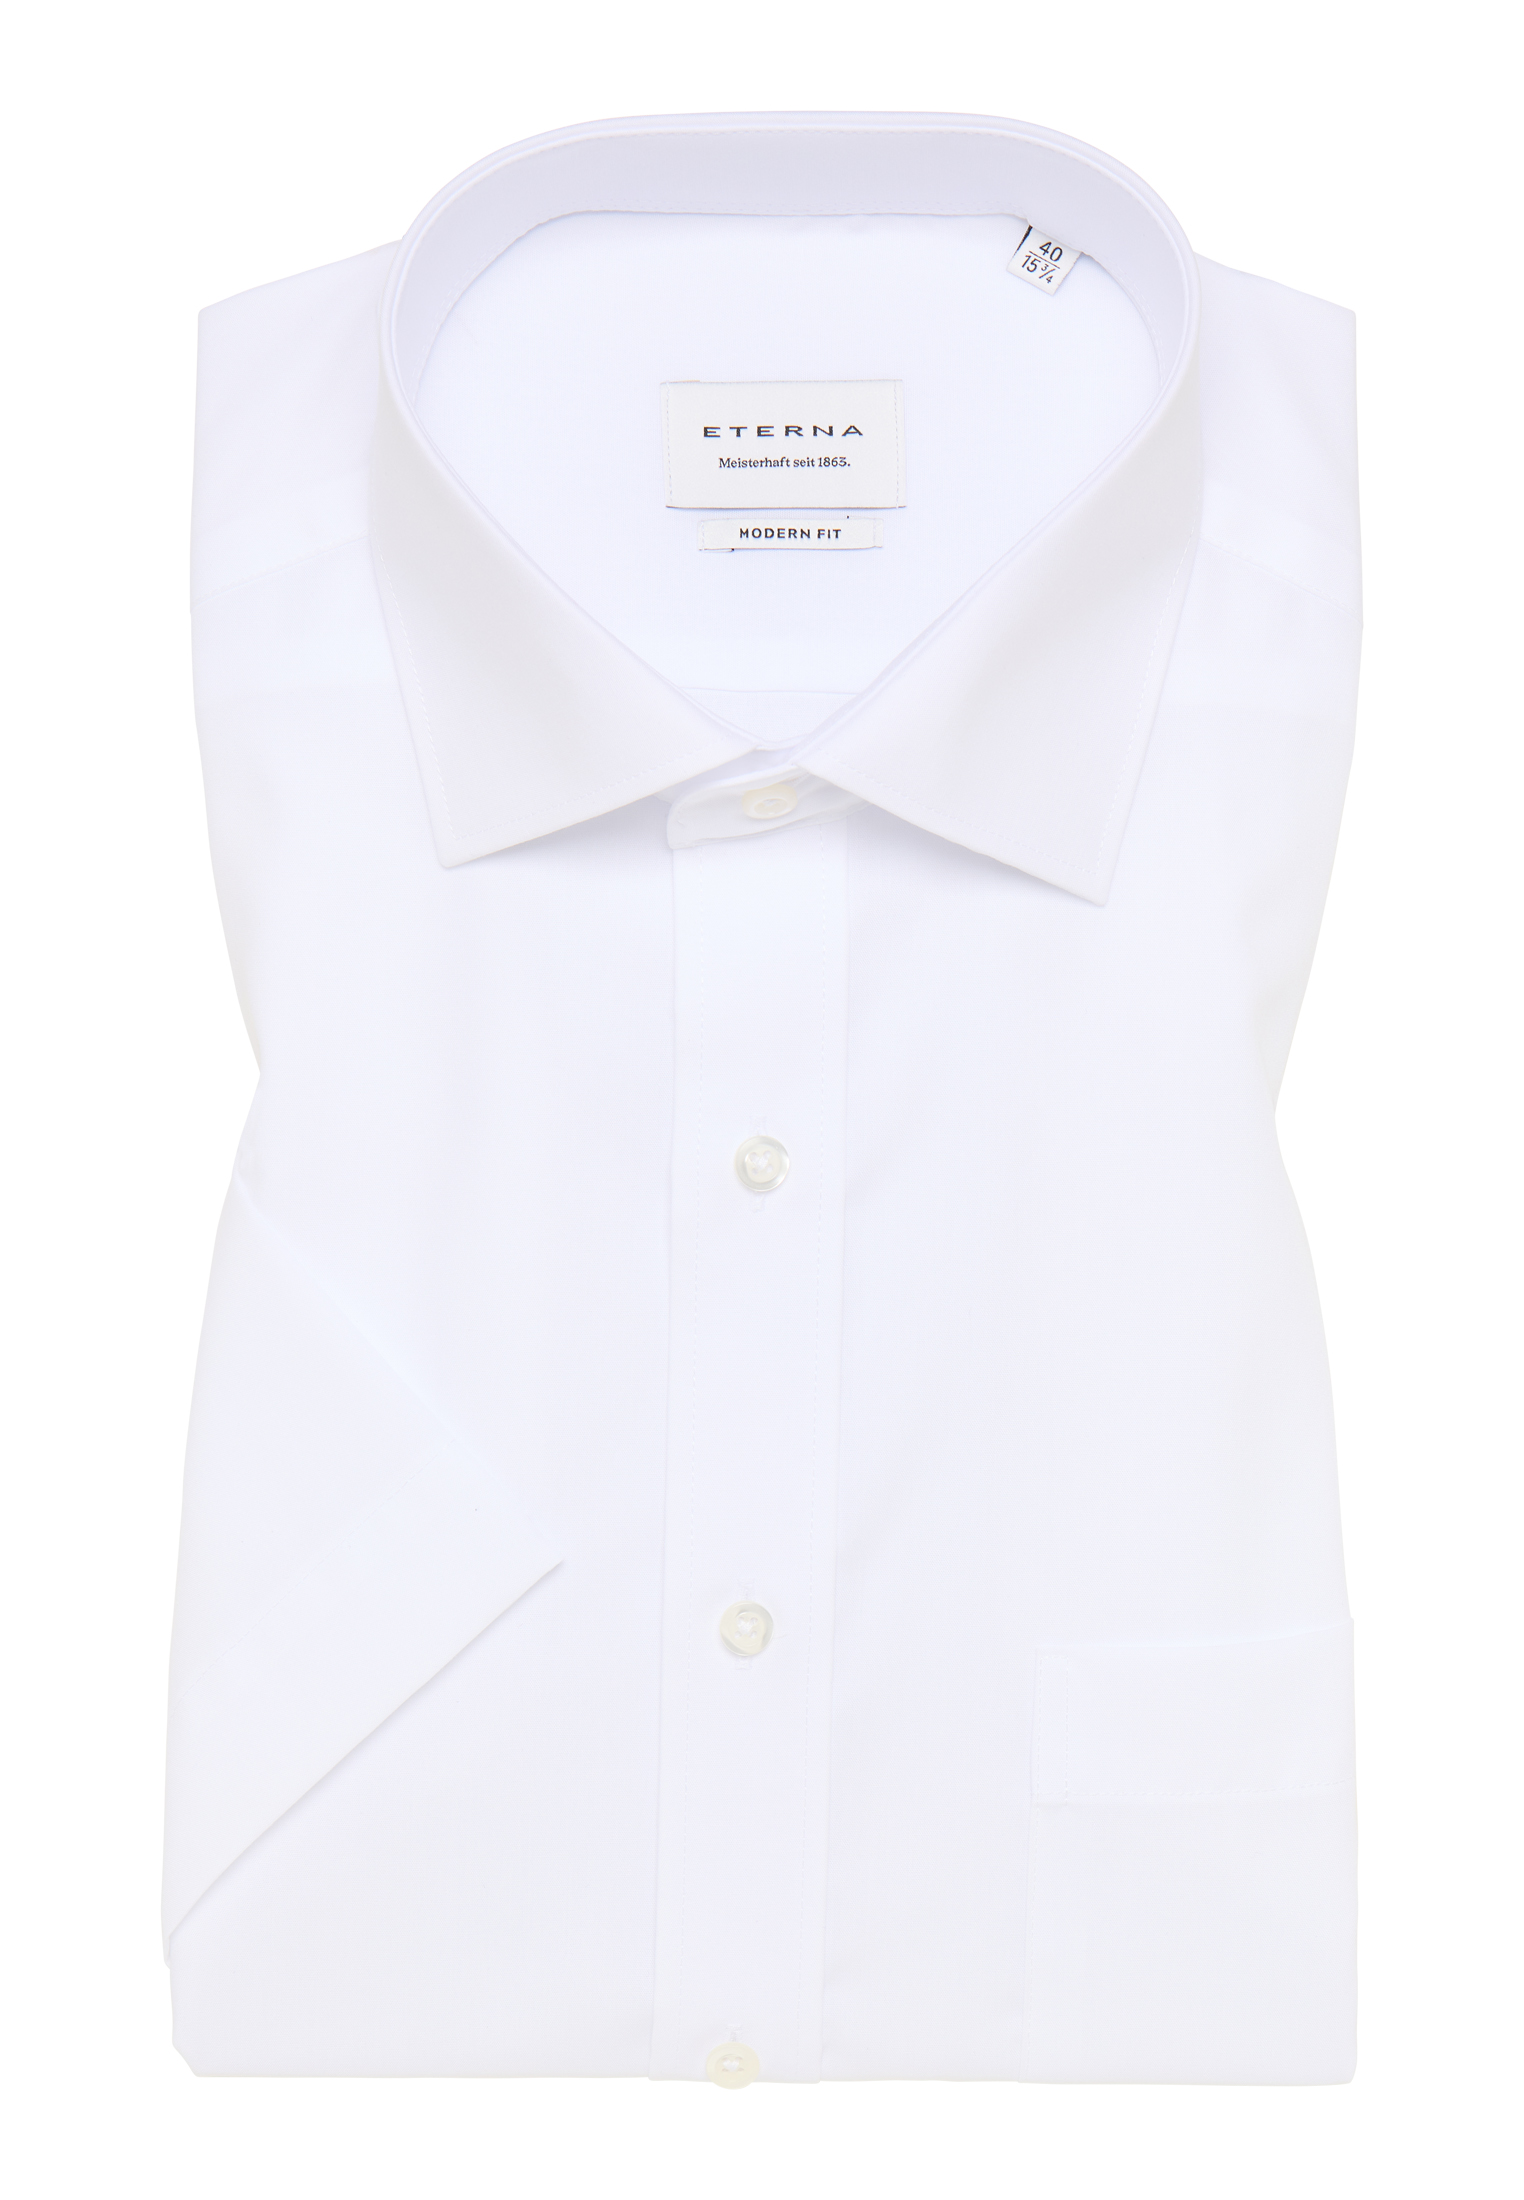 MODERN FIT Original Shirt | | weiß in weiß unifarben 1SH00092-00-01-37-1/2 | Kurzarm 37 